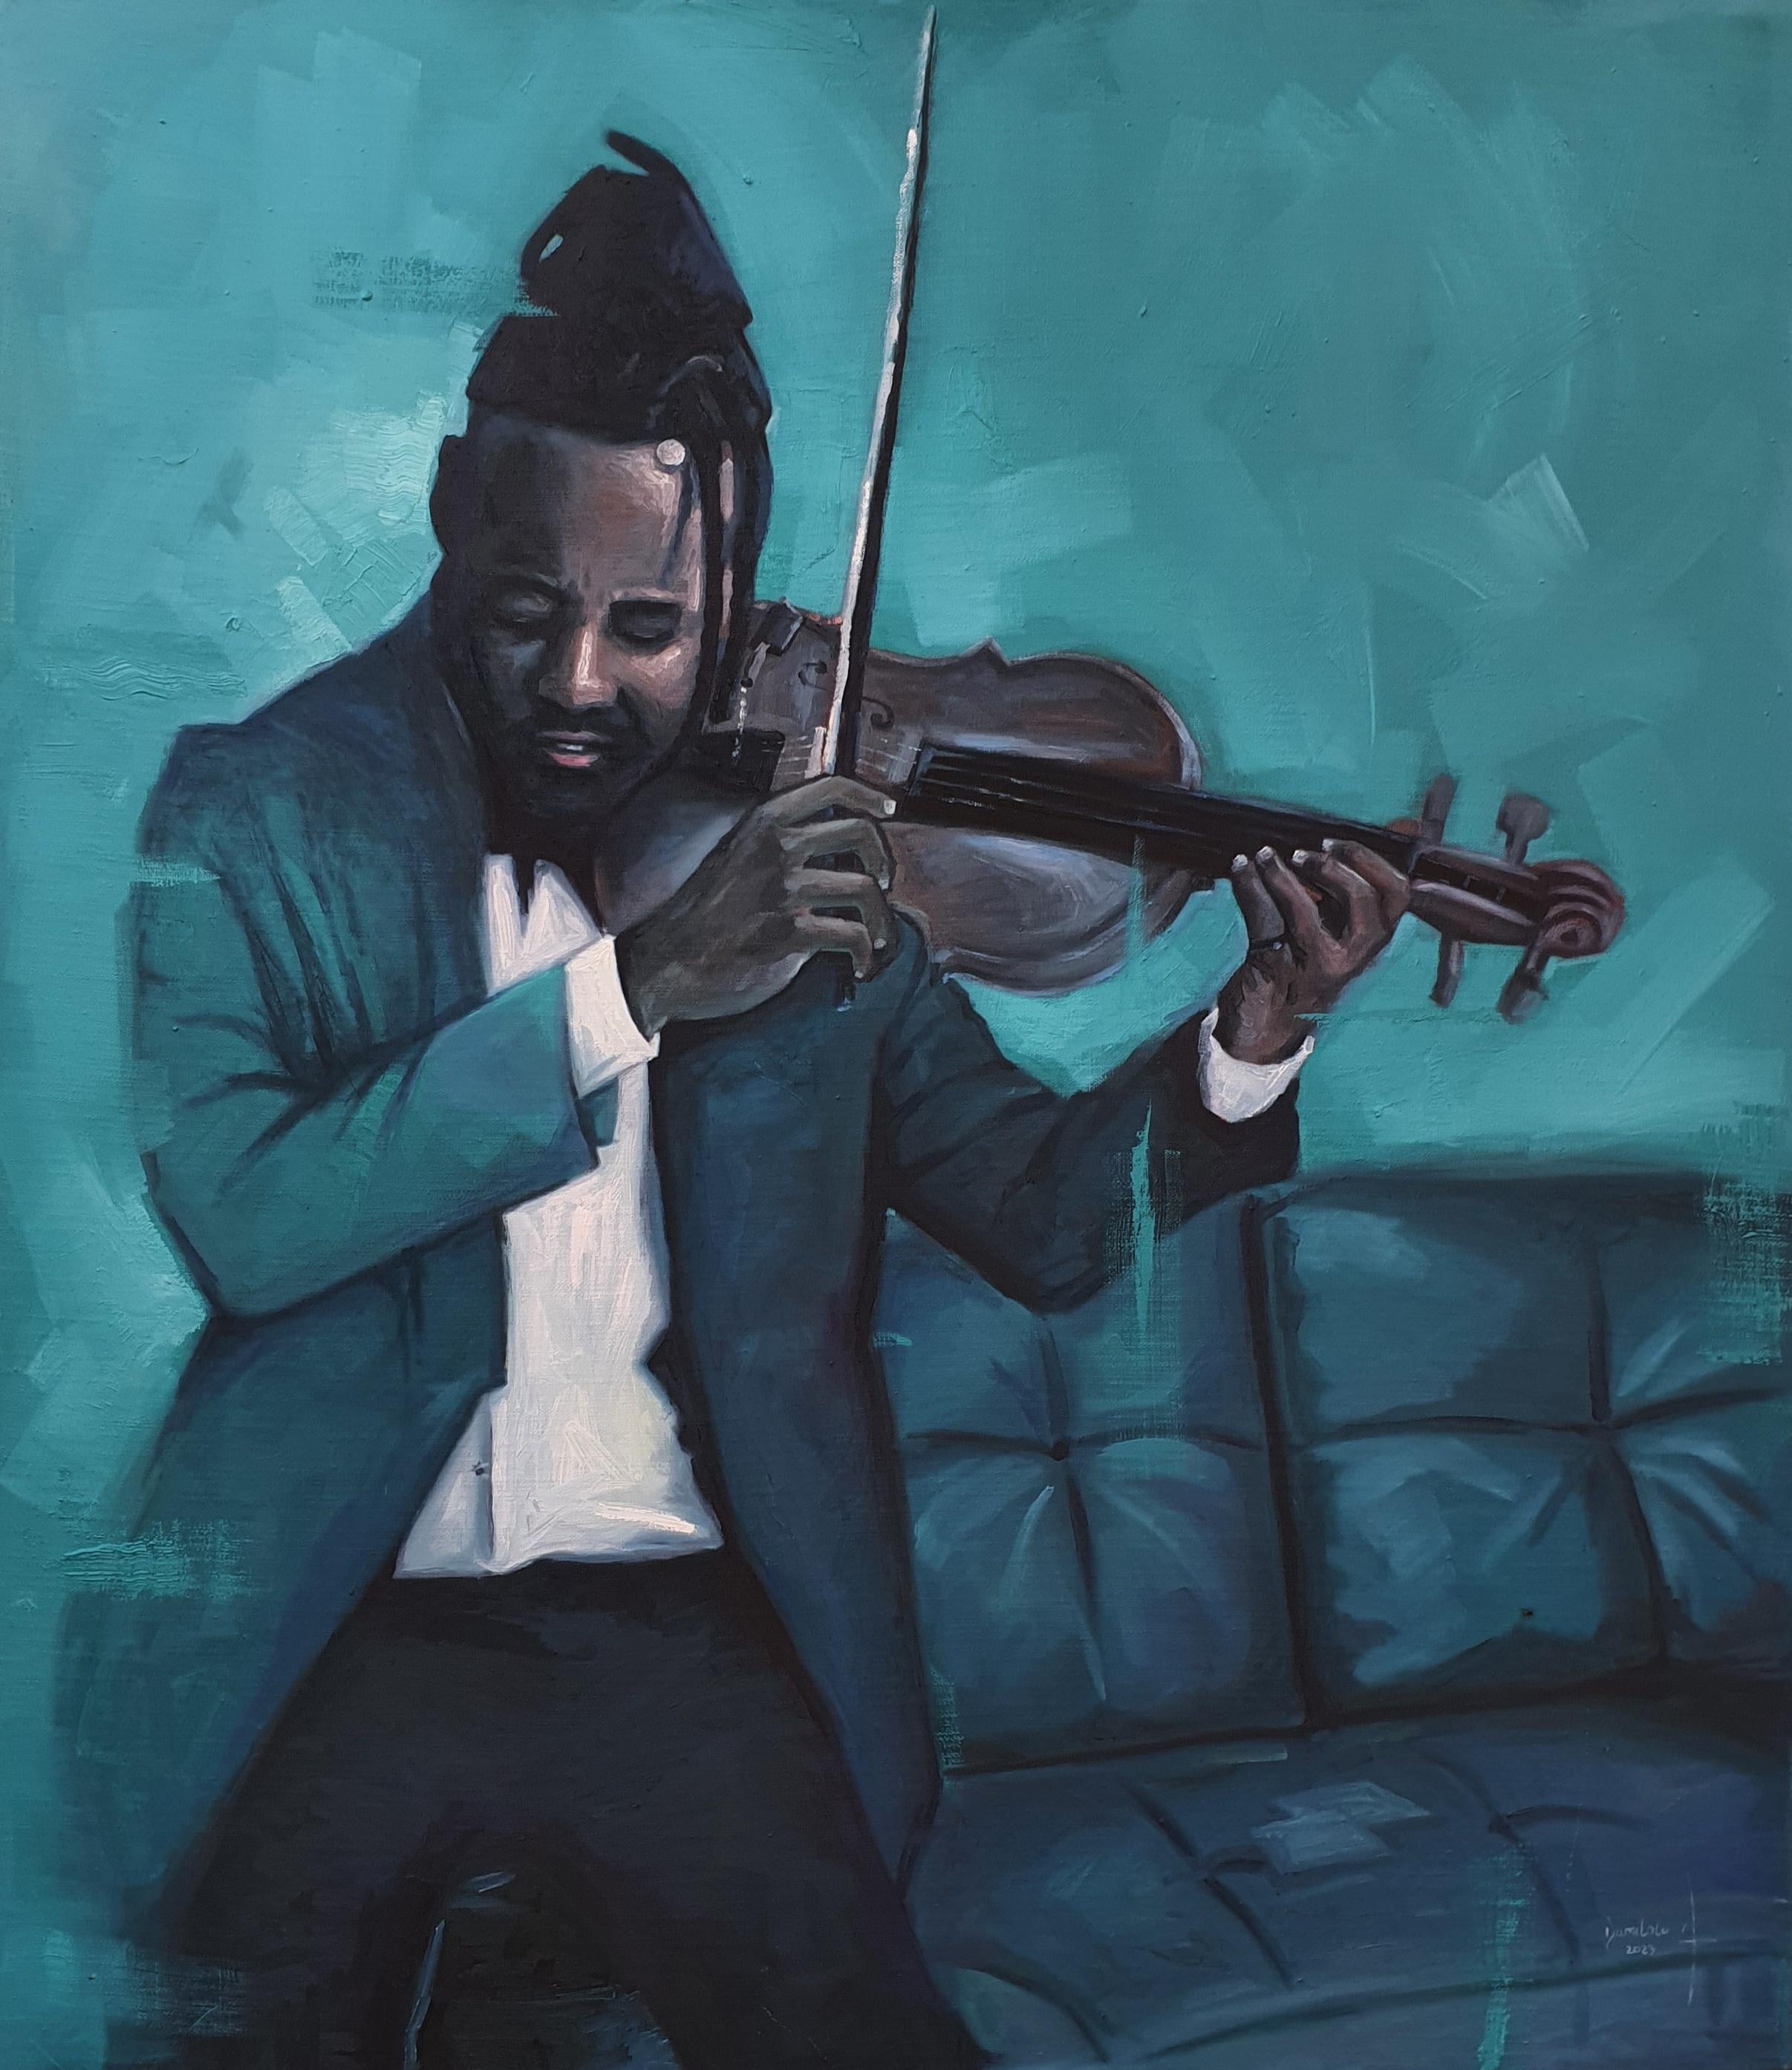 Ajegbomogun Damilola Figurative Painting - Yesterday Future 3 (Young Violinist)